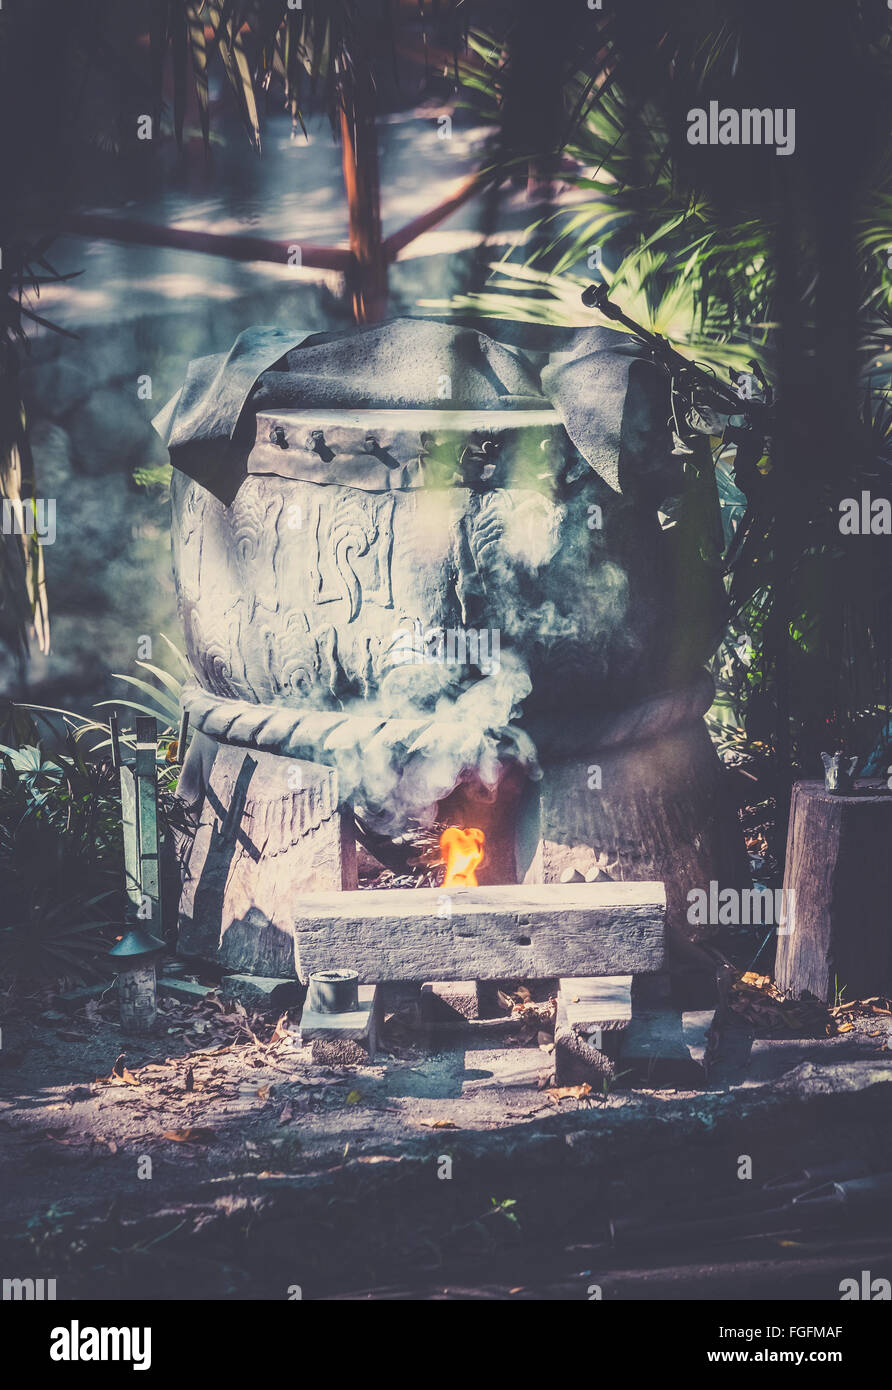 Ancient mayan cauldron in dense mexican jungle Stock Photo